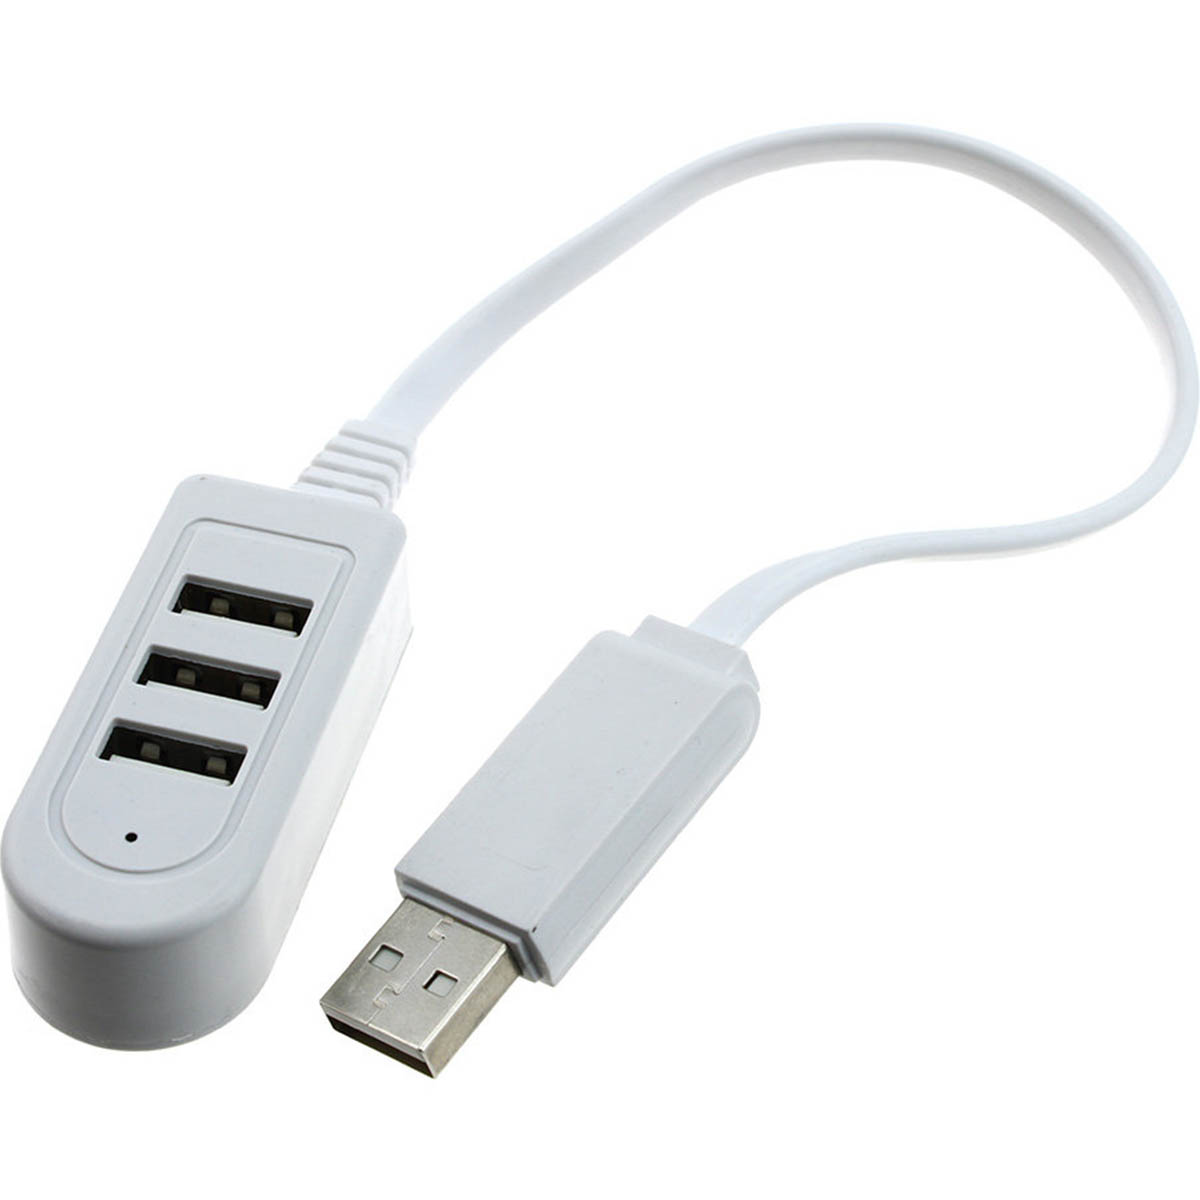 Переходник, хаб концентратор H030 USB на 3 USB 2.0, цвет белый